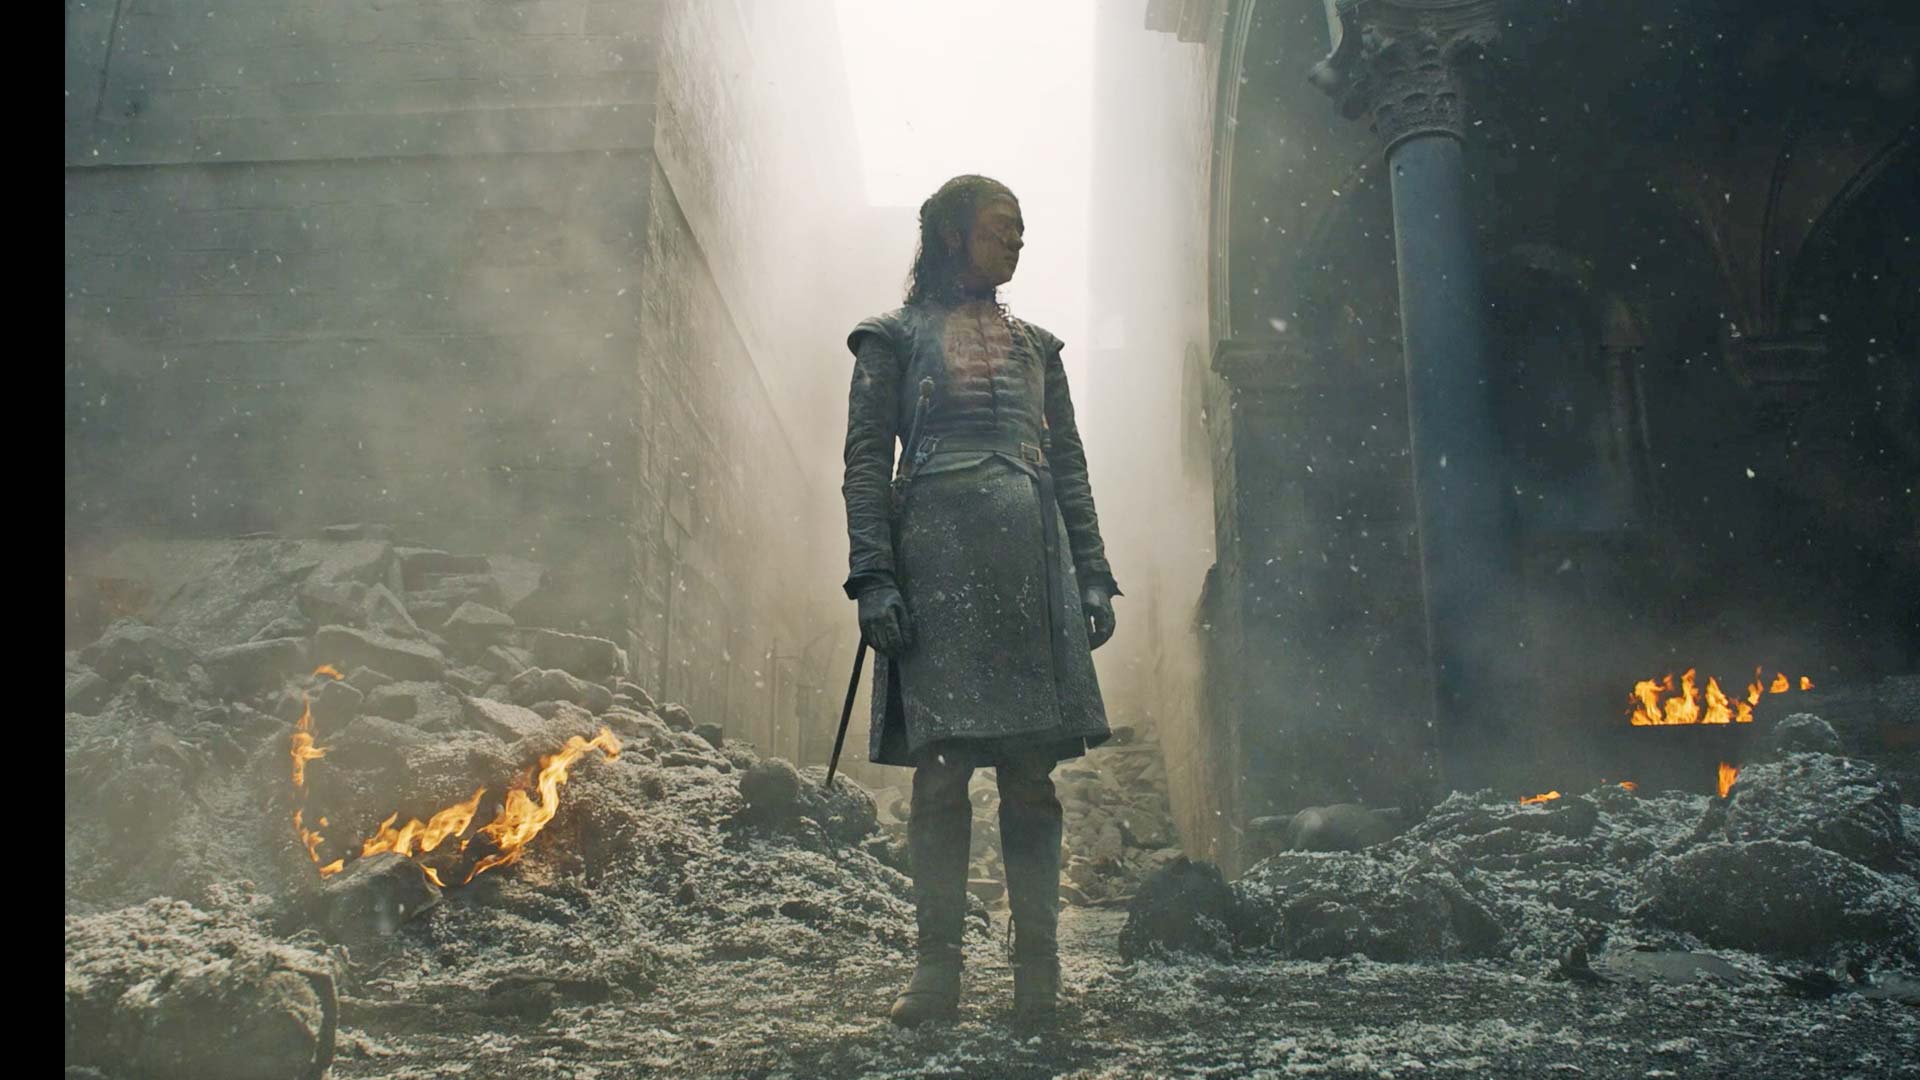 Arya Stark In Got 8 The Last War Wallpapers